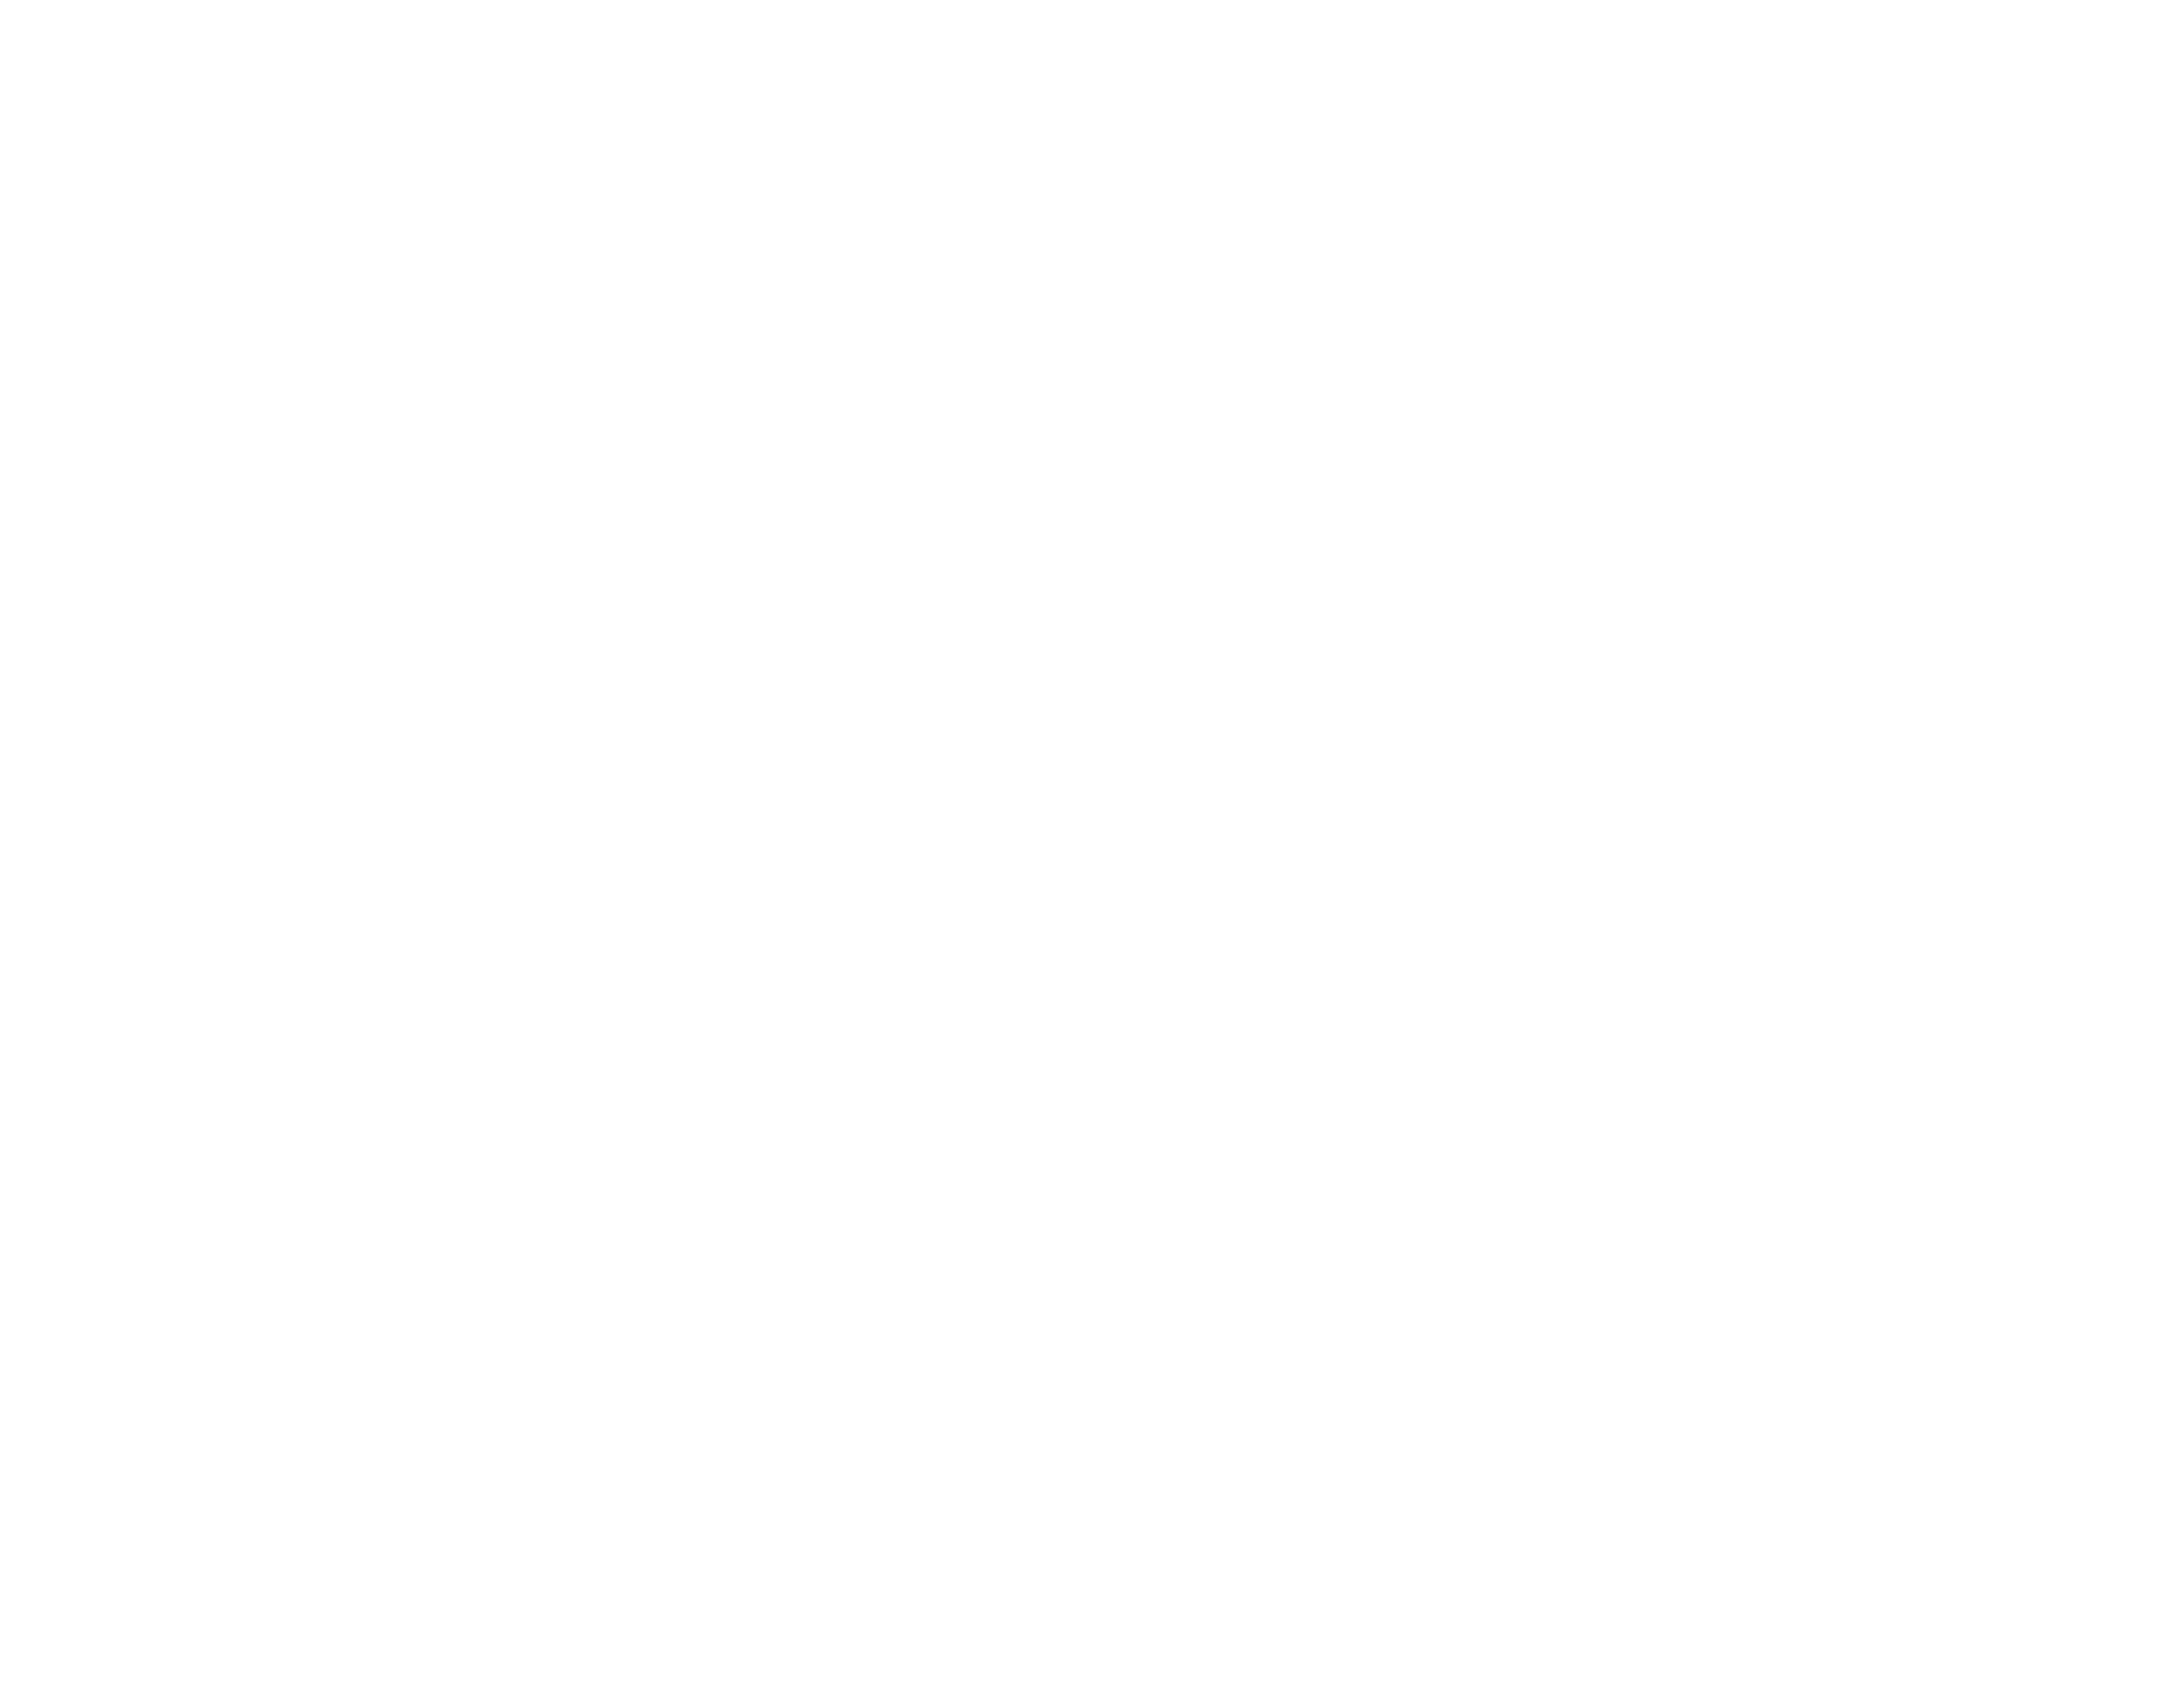 Famous Translucent Logo - Design. Communications. City of San Diego Official Website